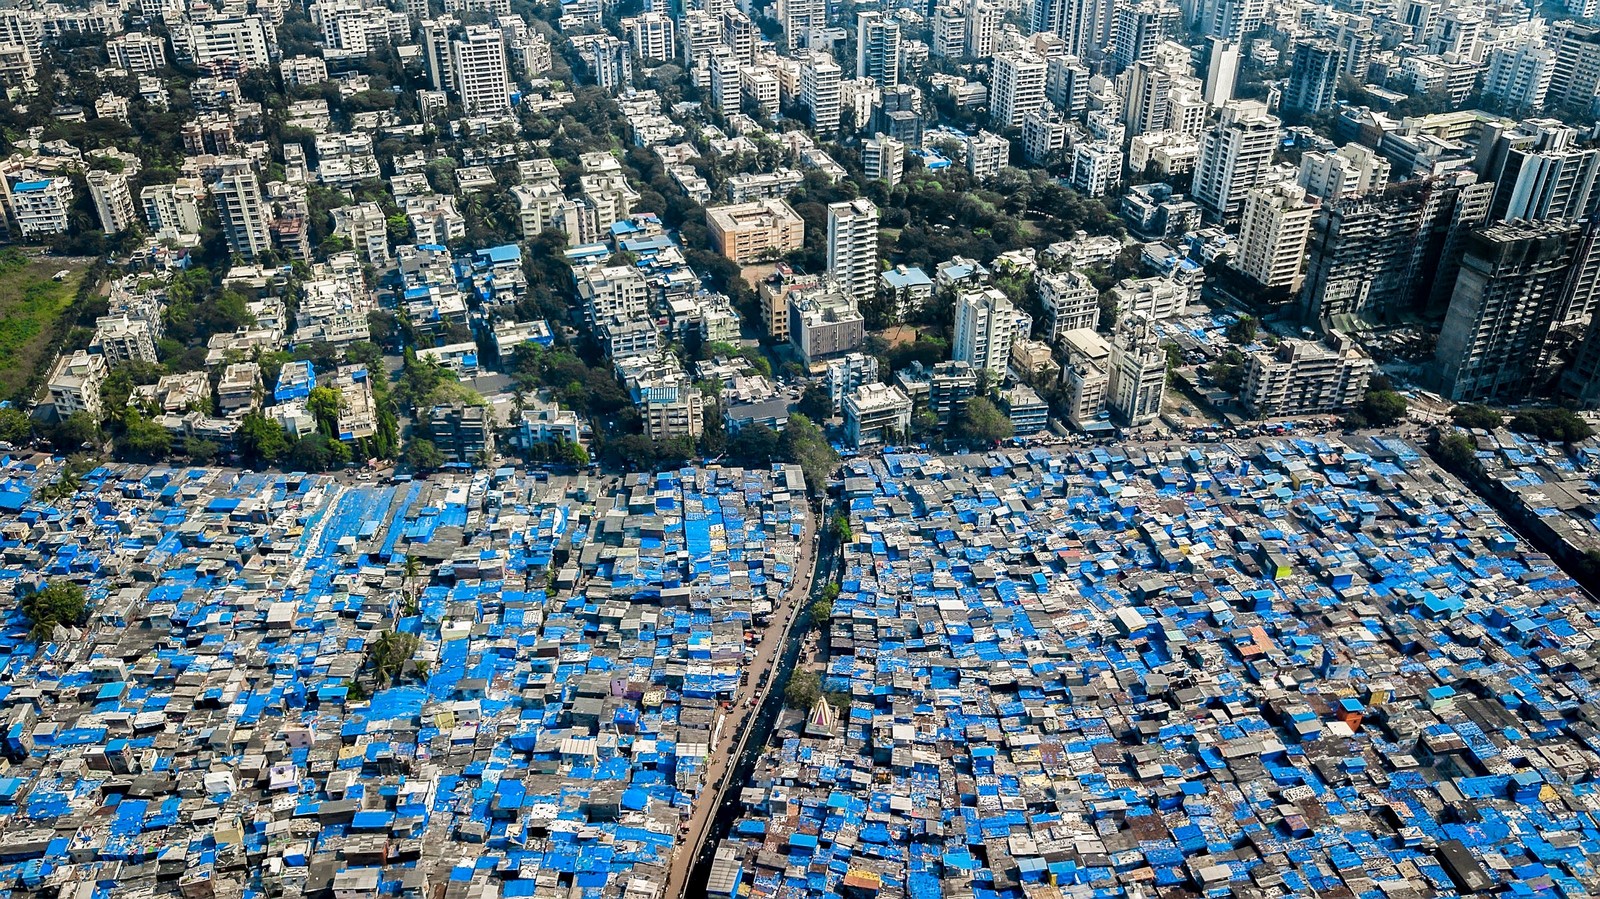 Divided Realities of A World Class City - Sheet4